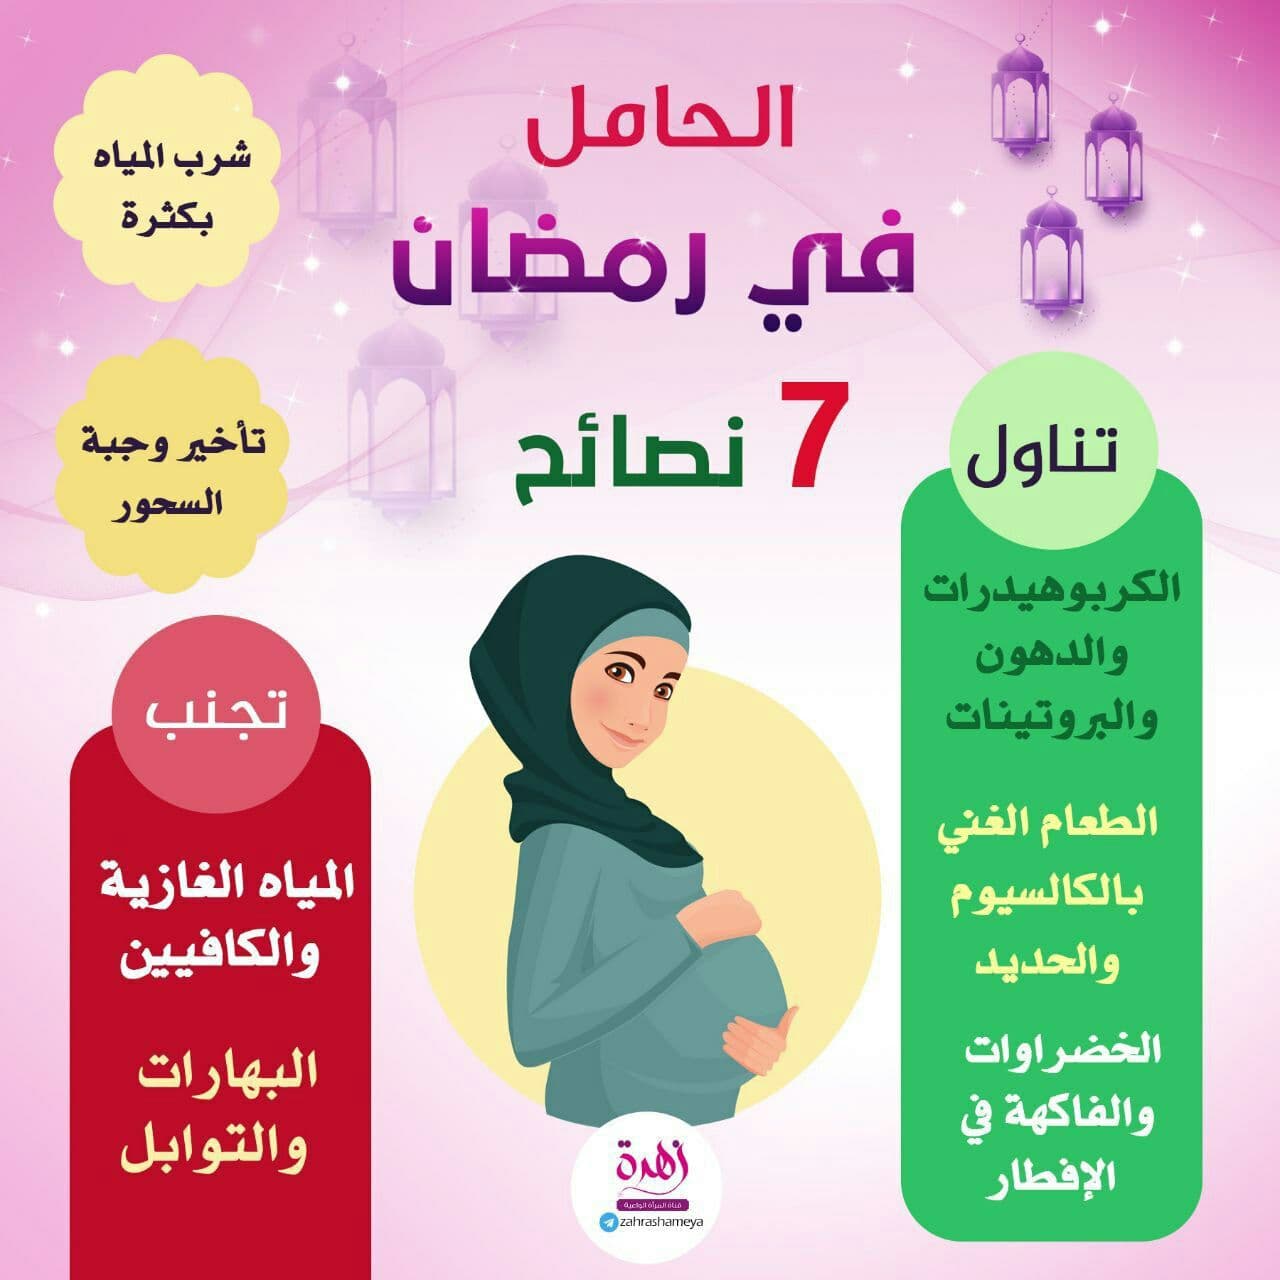 رمضان - الحامل في رمضان